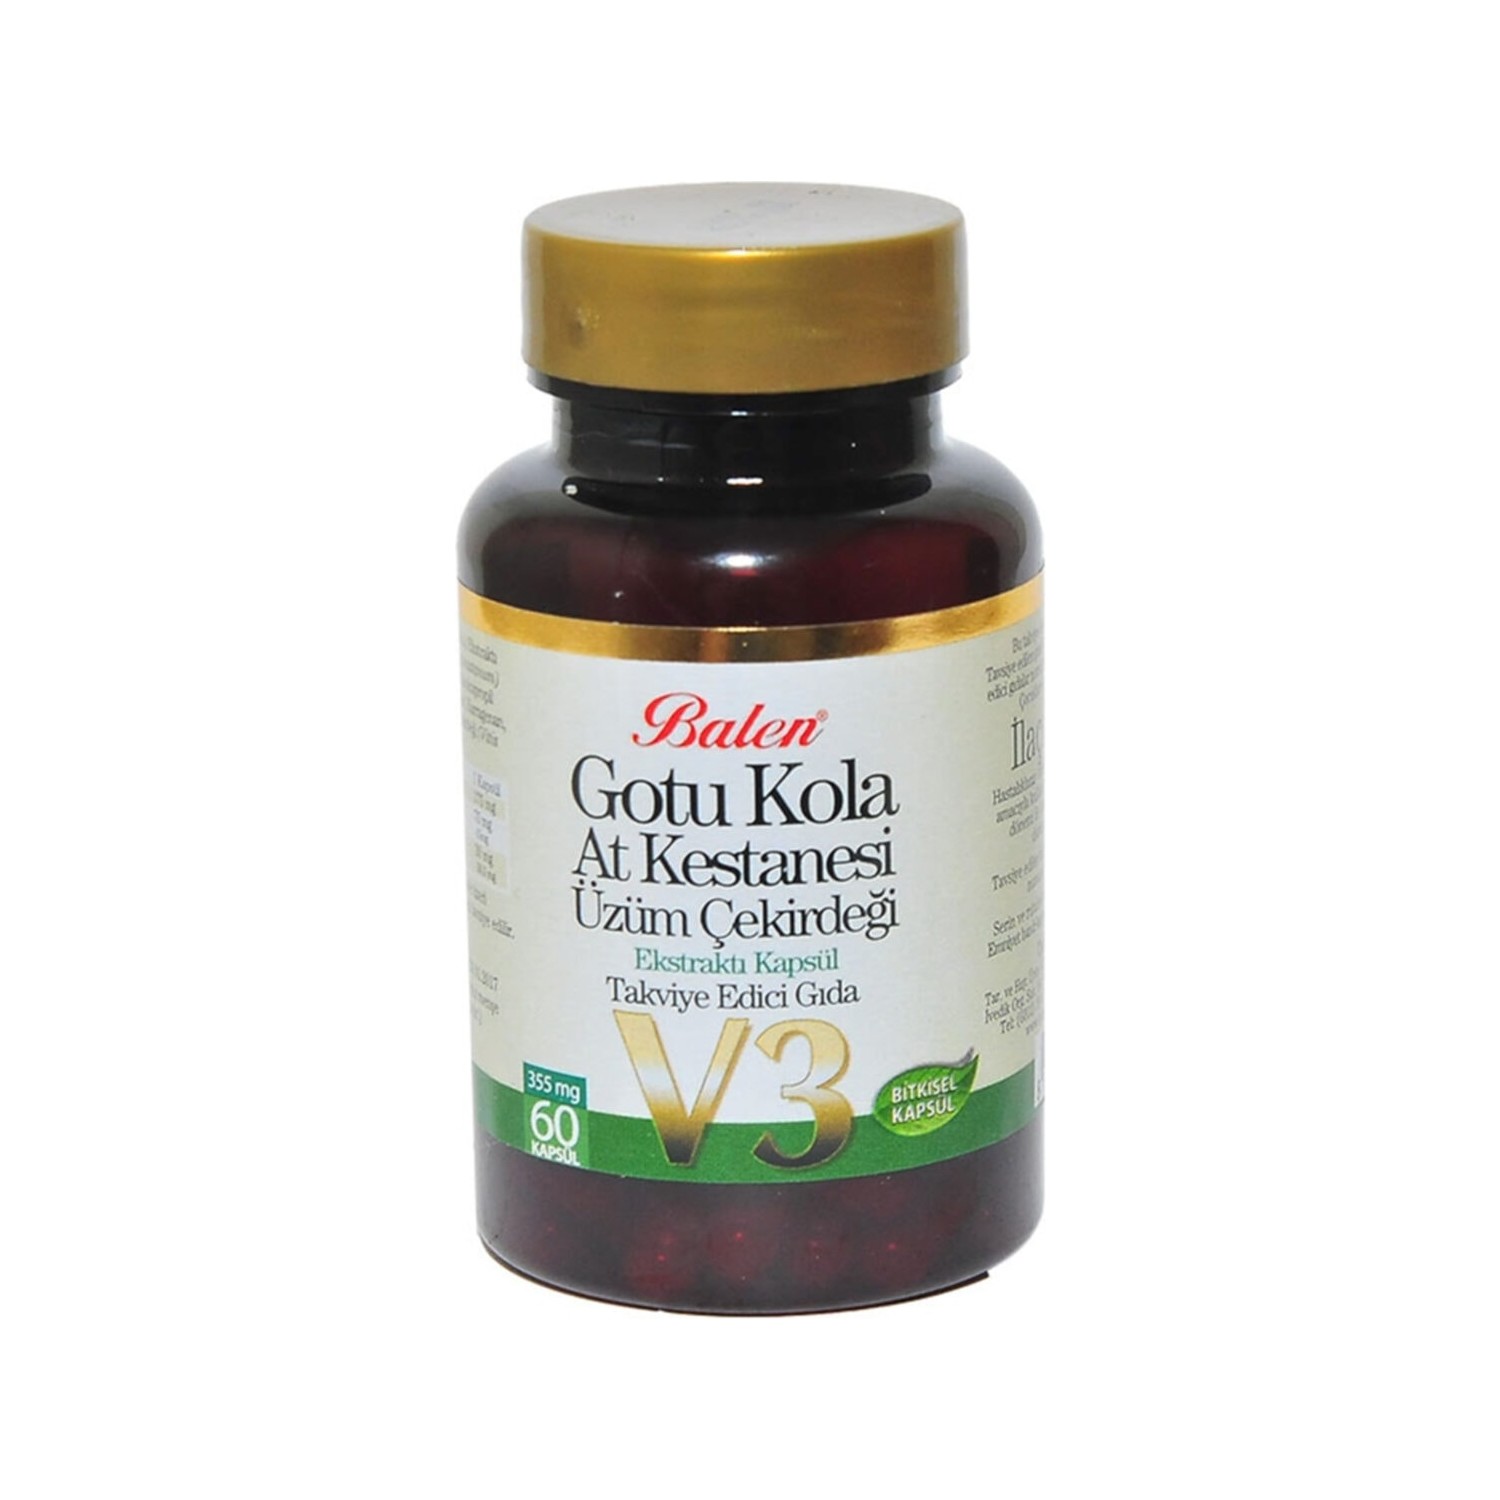 Активная добавка Balen Gotu Kola Horse Chestnut Grape Seed Extract V3, 60 капсул, 355 мг порошок центеллы азиатской now gotu kola в капсулах 100 шт